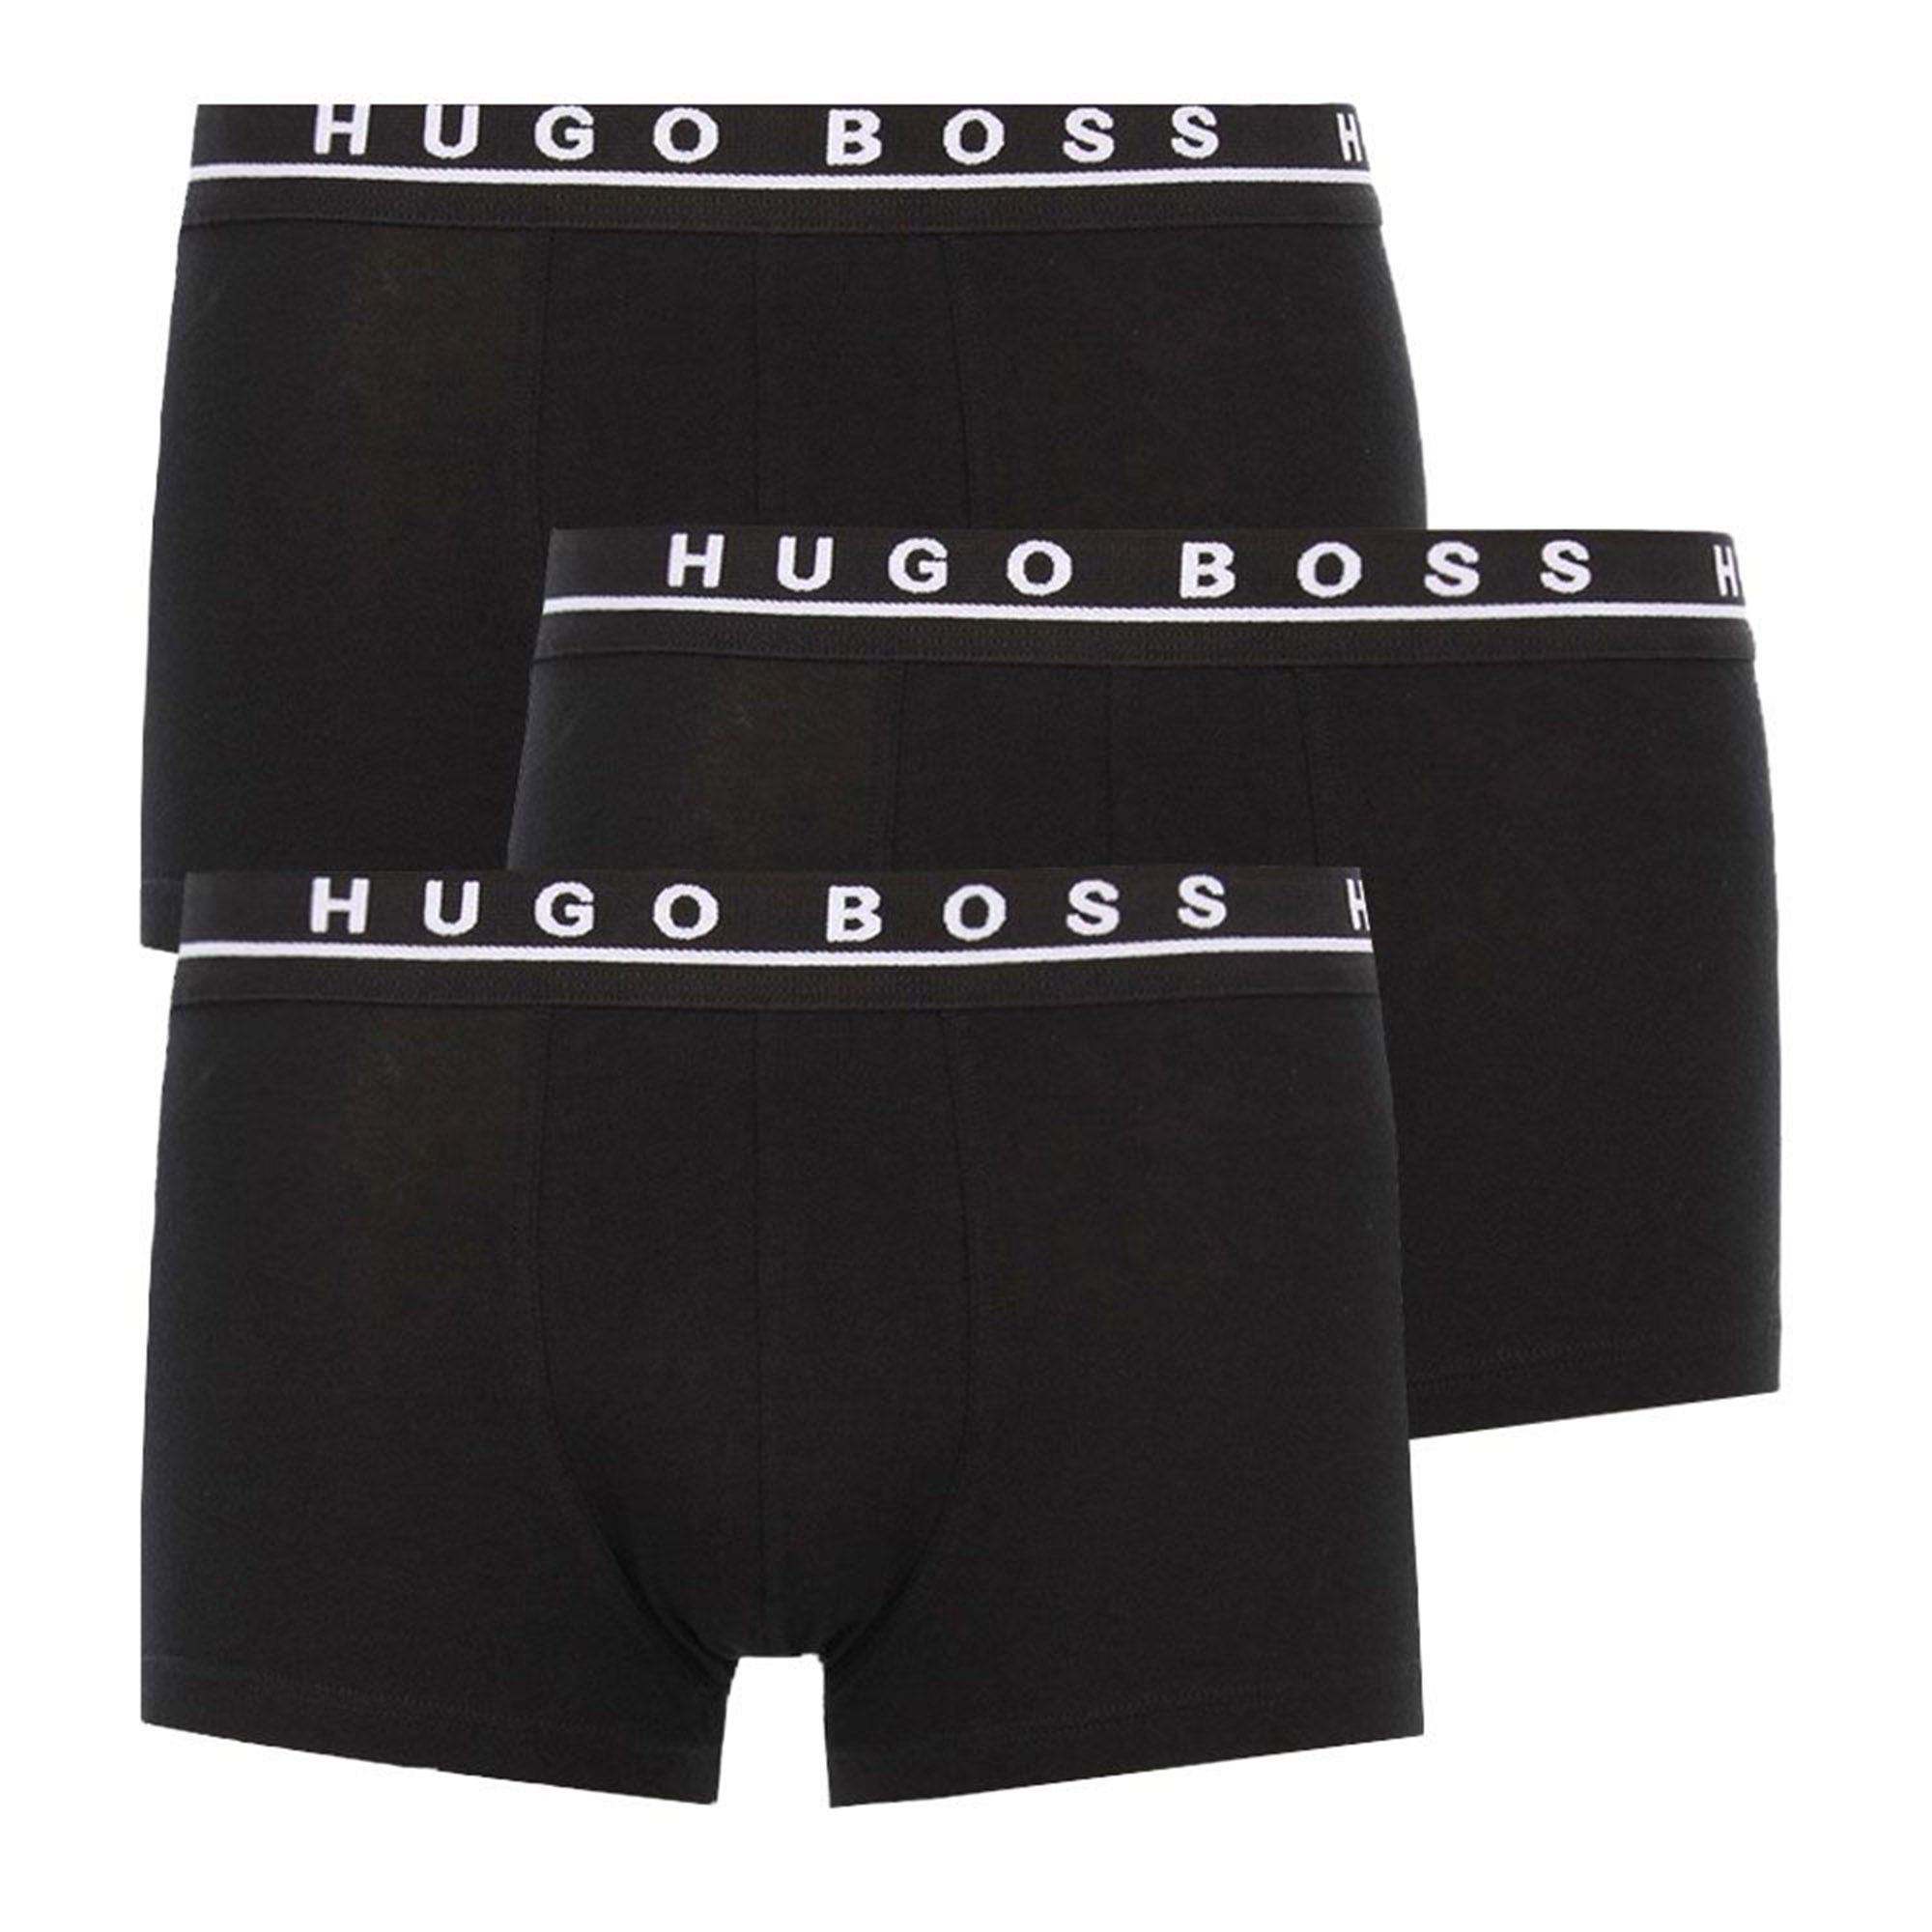 Hugo Boss Mens 3 Pack Boxers Black